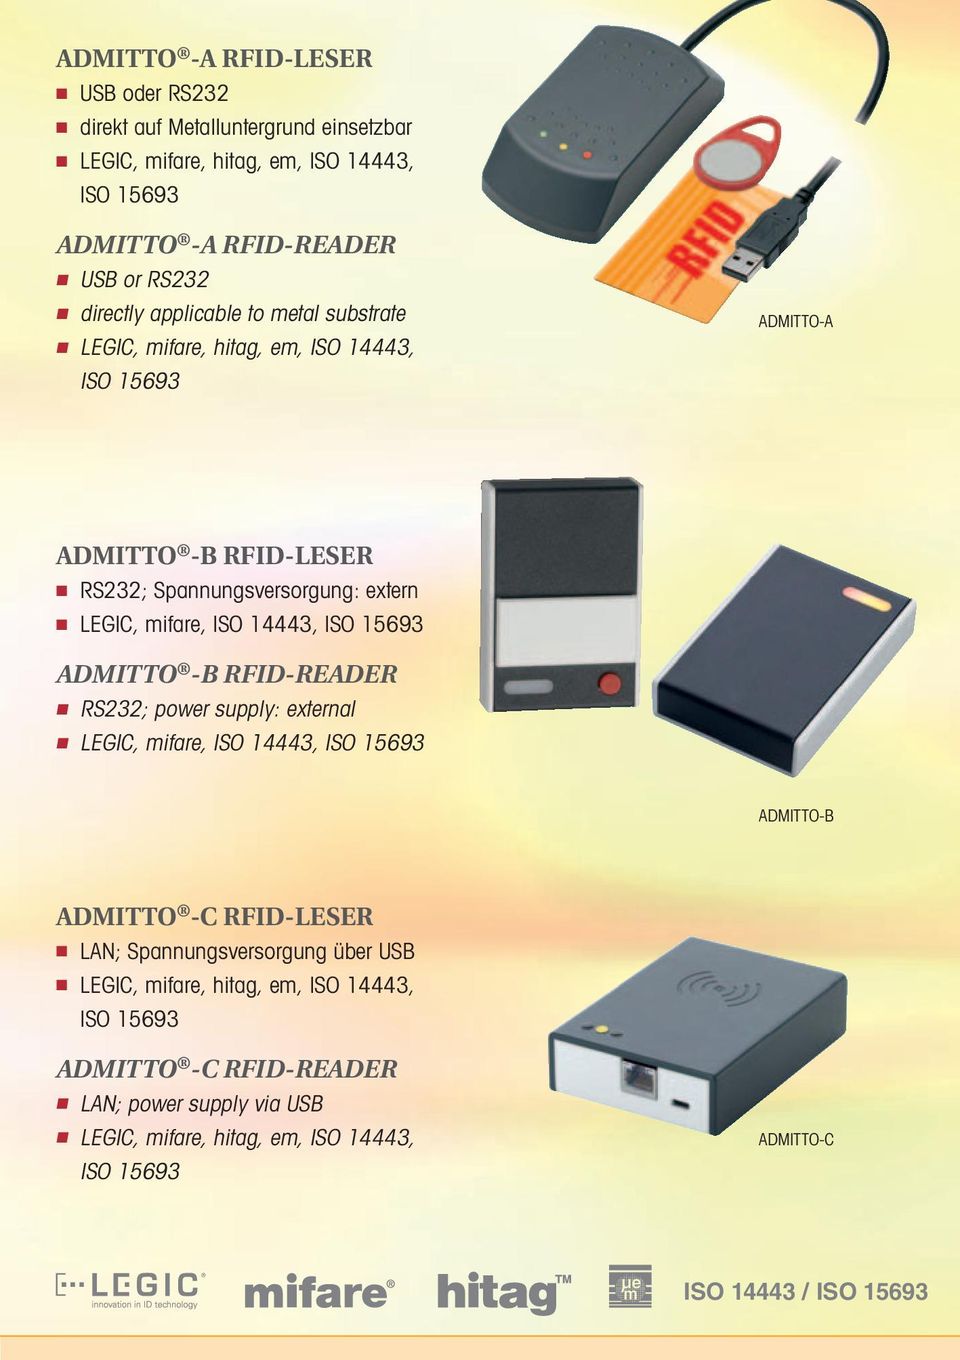 ISO 15693 ADMITTO -B RFID-READER RS232; power supply: external LEGIC, mifare, ISO 14443, ISO 15693 ADMITTO-B ADMITTO -C RFID-LESER LAN; Spannungsversorgung über USB